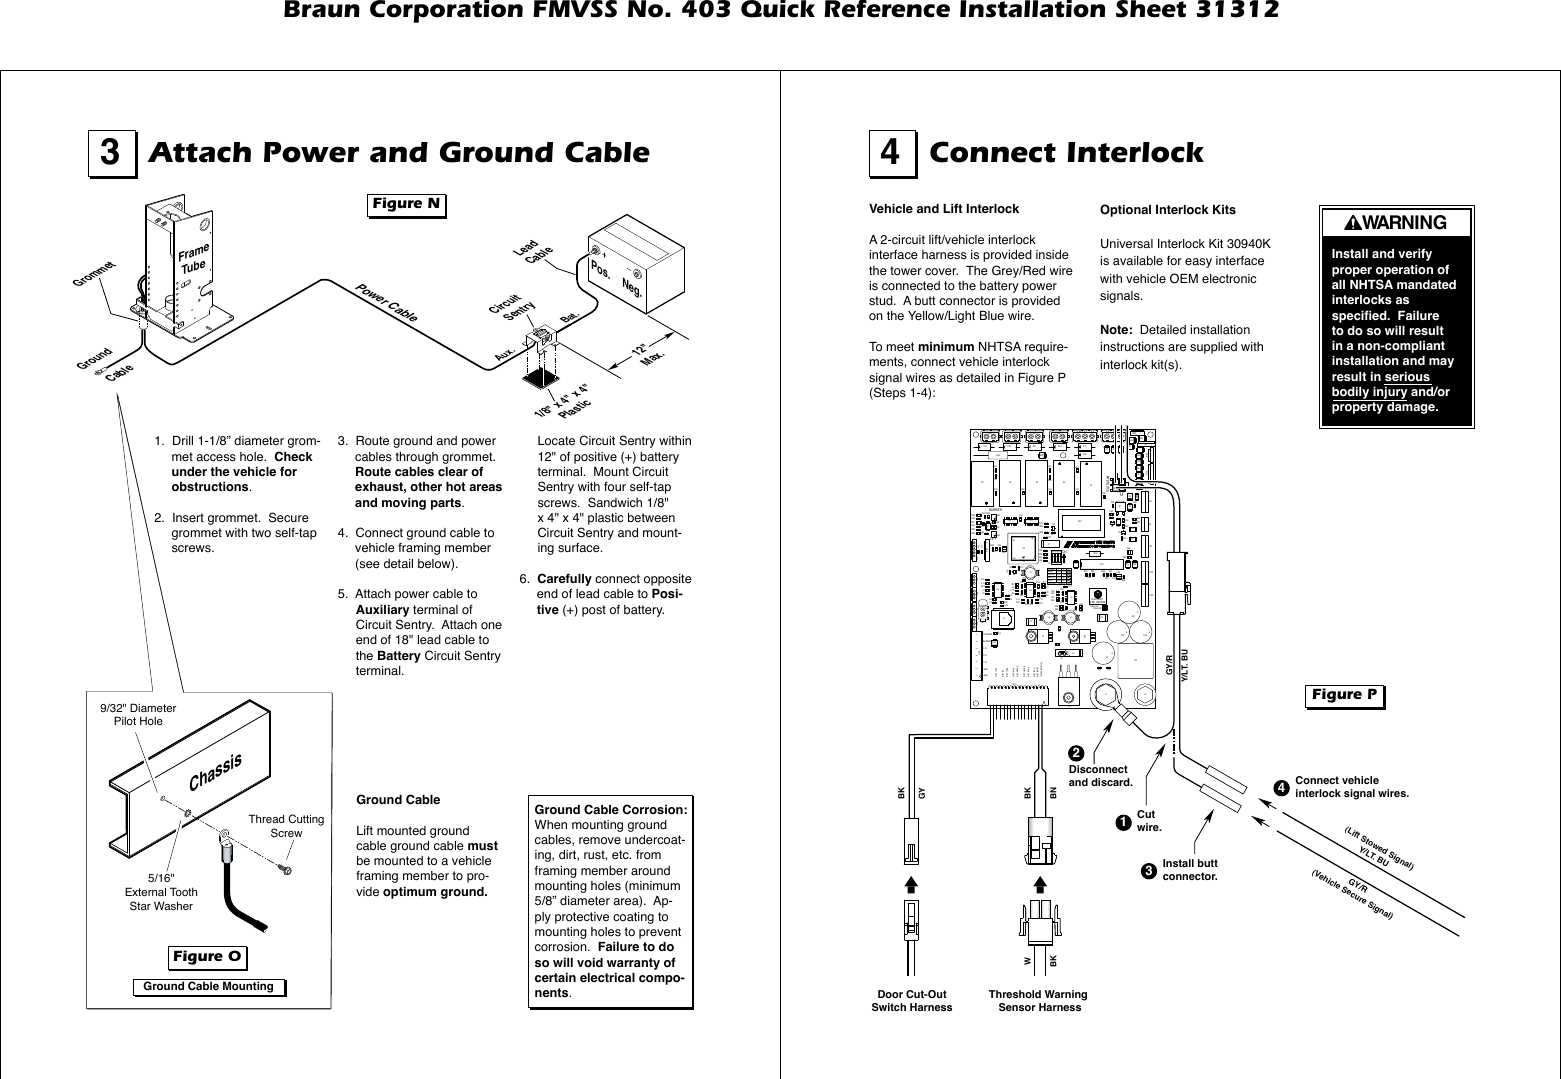 Page 3 of 8 - Braun Braun-Corporation-Fmvss-No-403-403-Users-Manual-  Braun-corporation-fmvss-no-403-403-users-manual